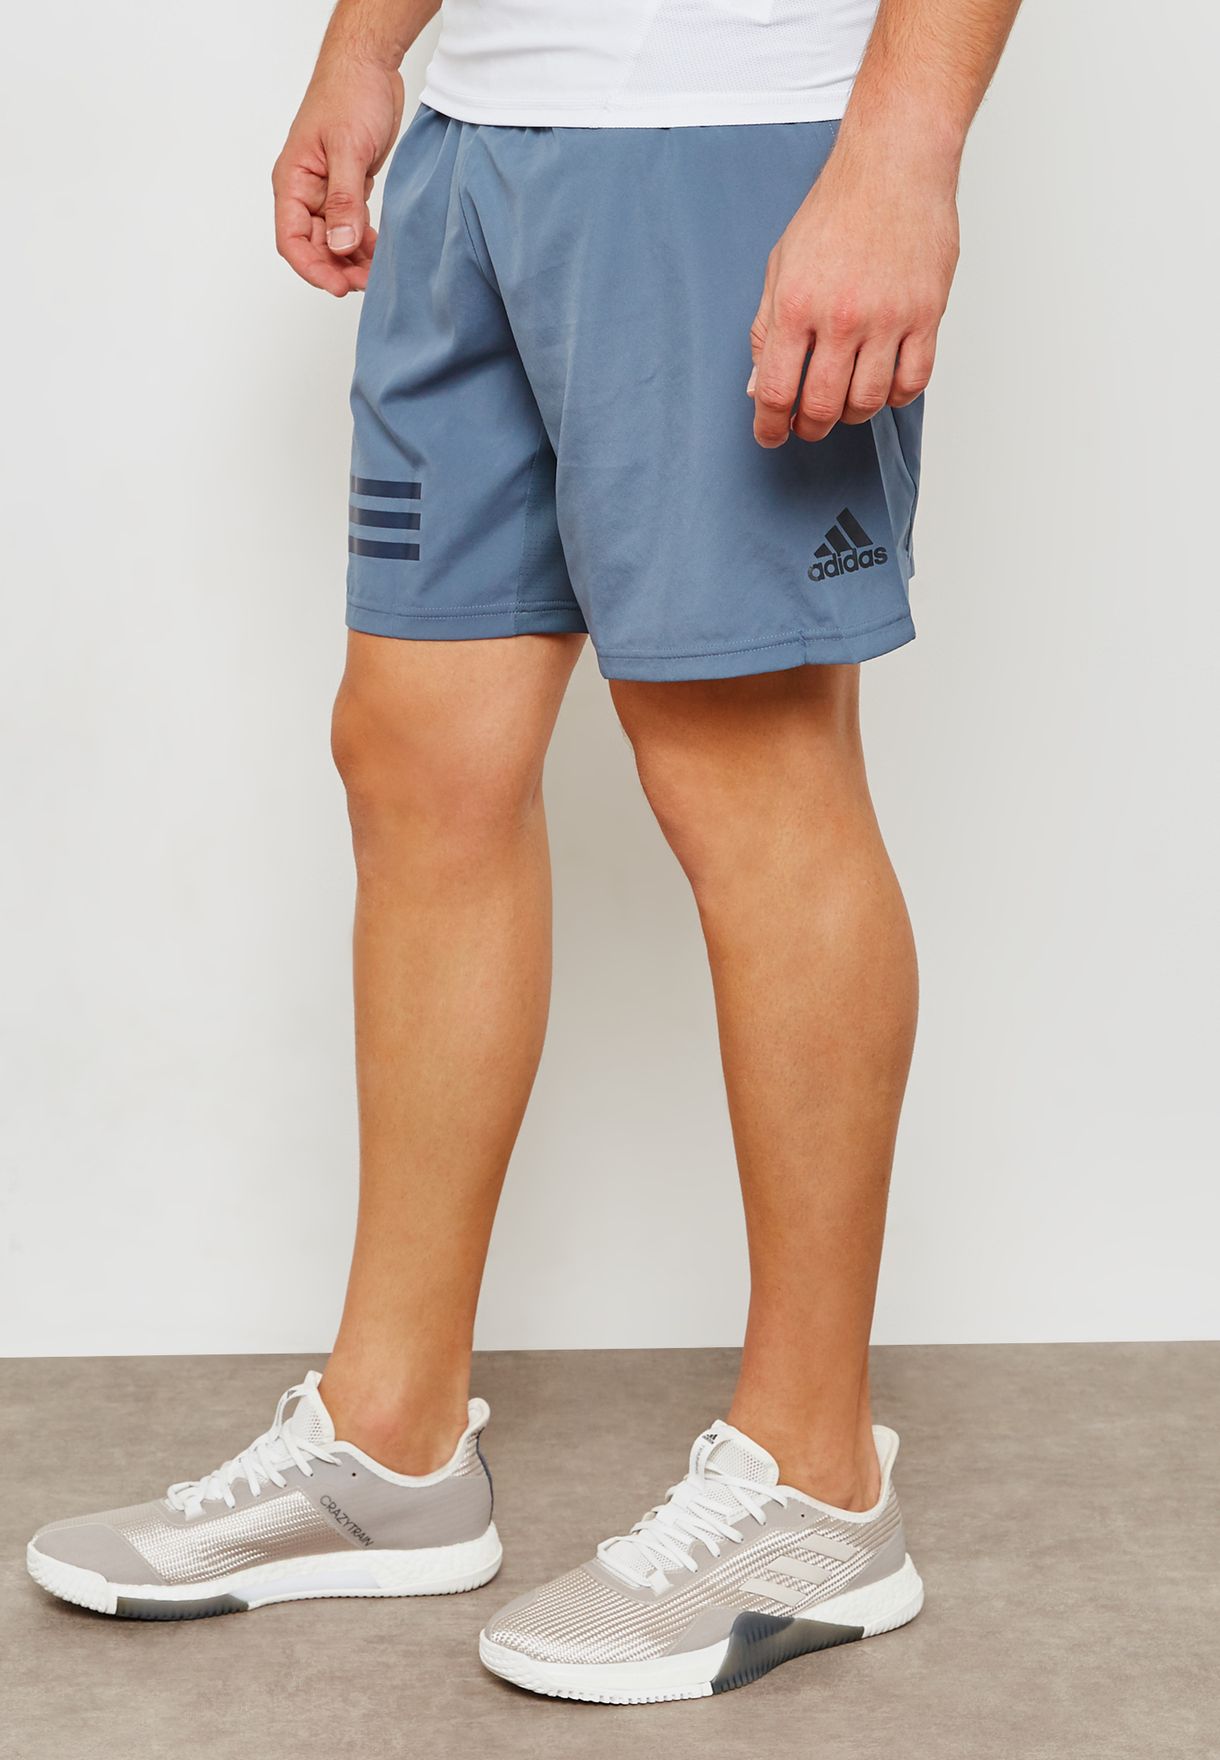 adidas 4krft climacool shorts Shop Clothing & Shoes Online